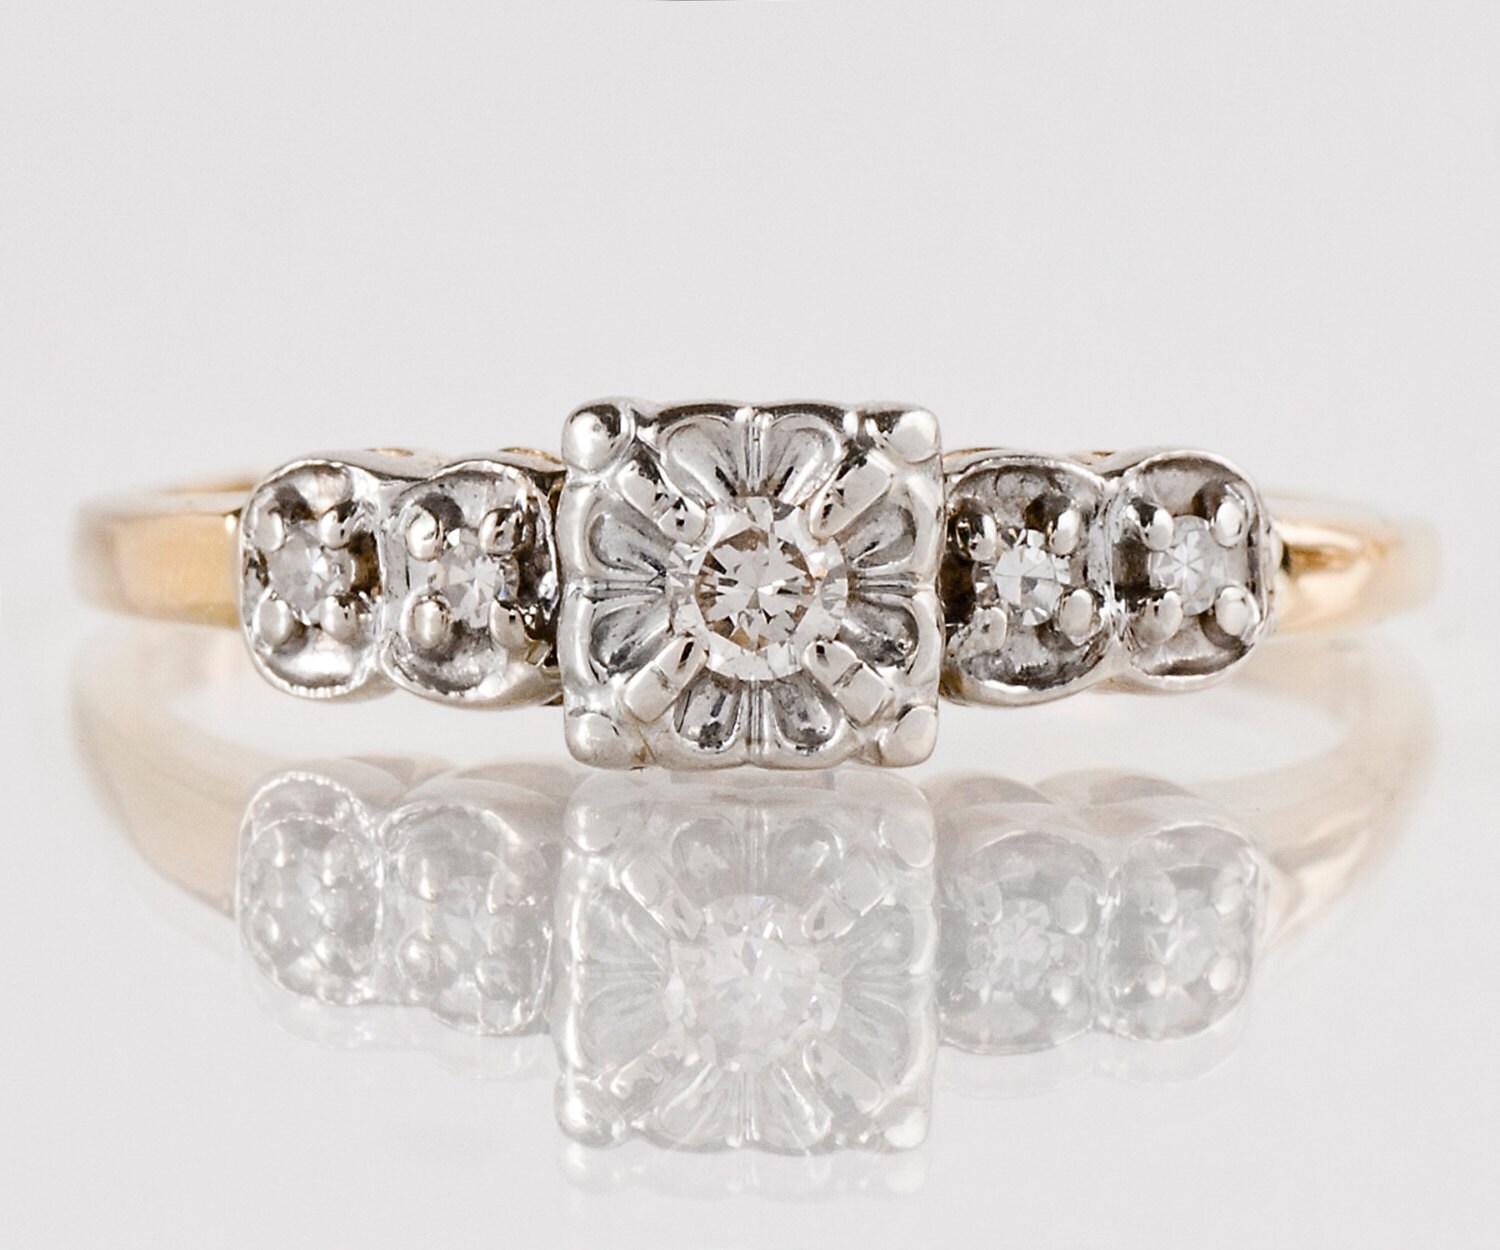 Vintage Engagement Ring Vintage 14k Yellow & White Gold